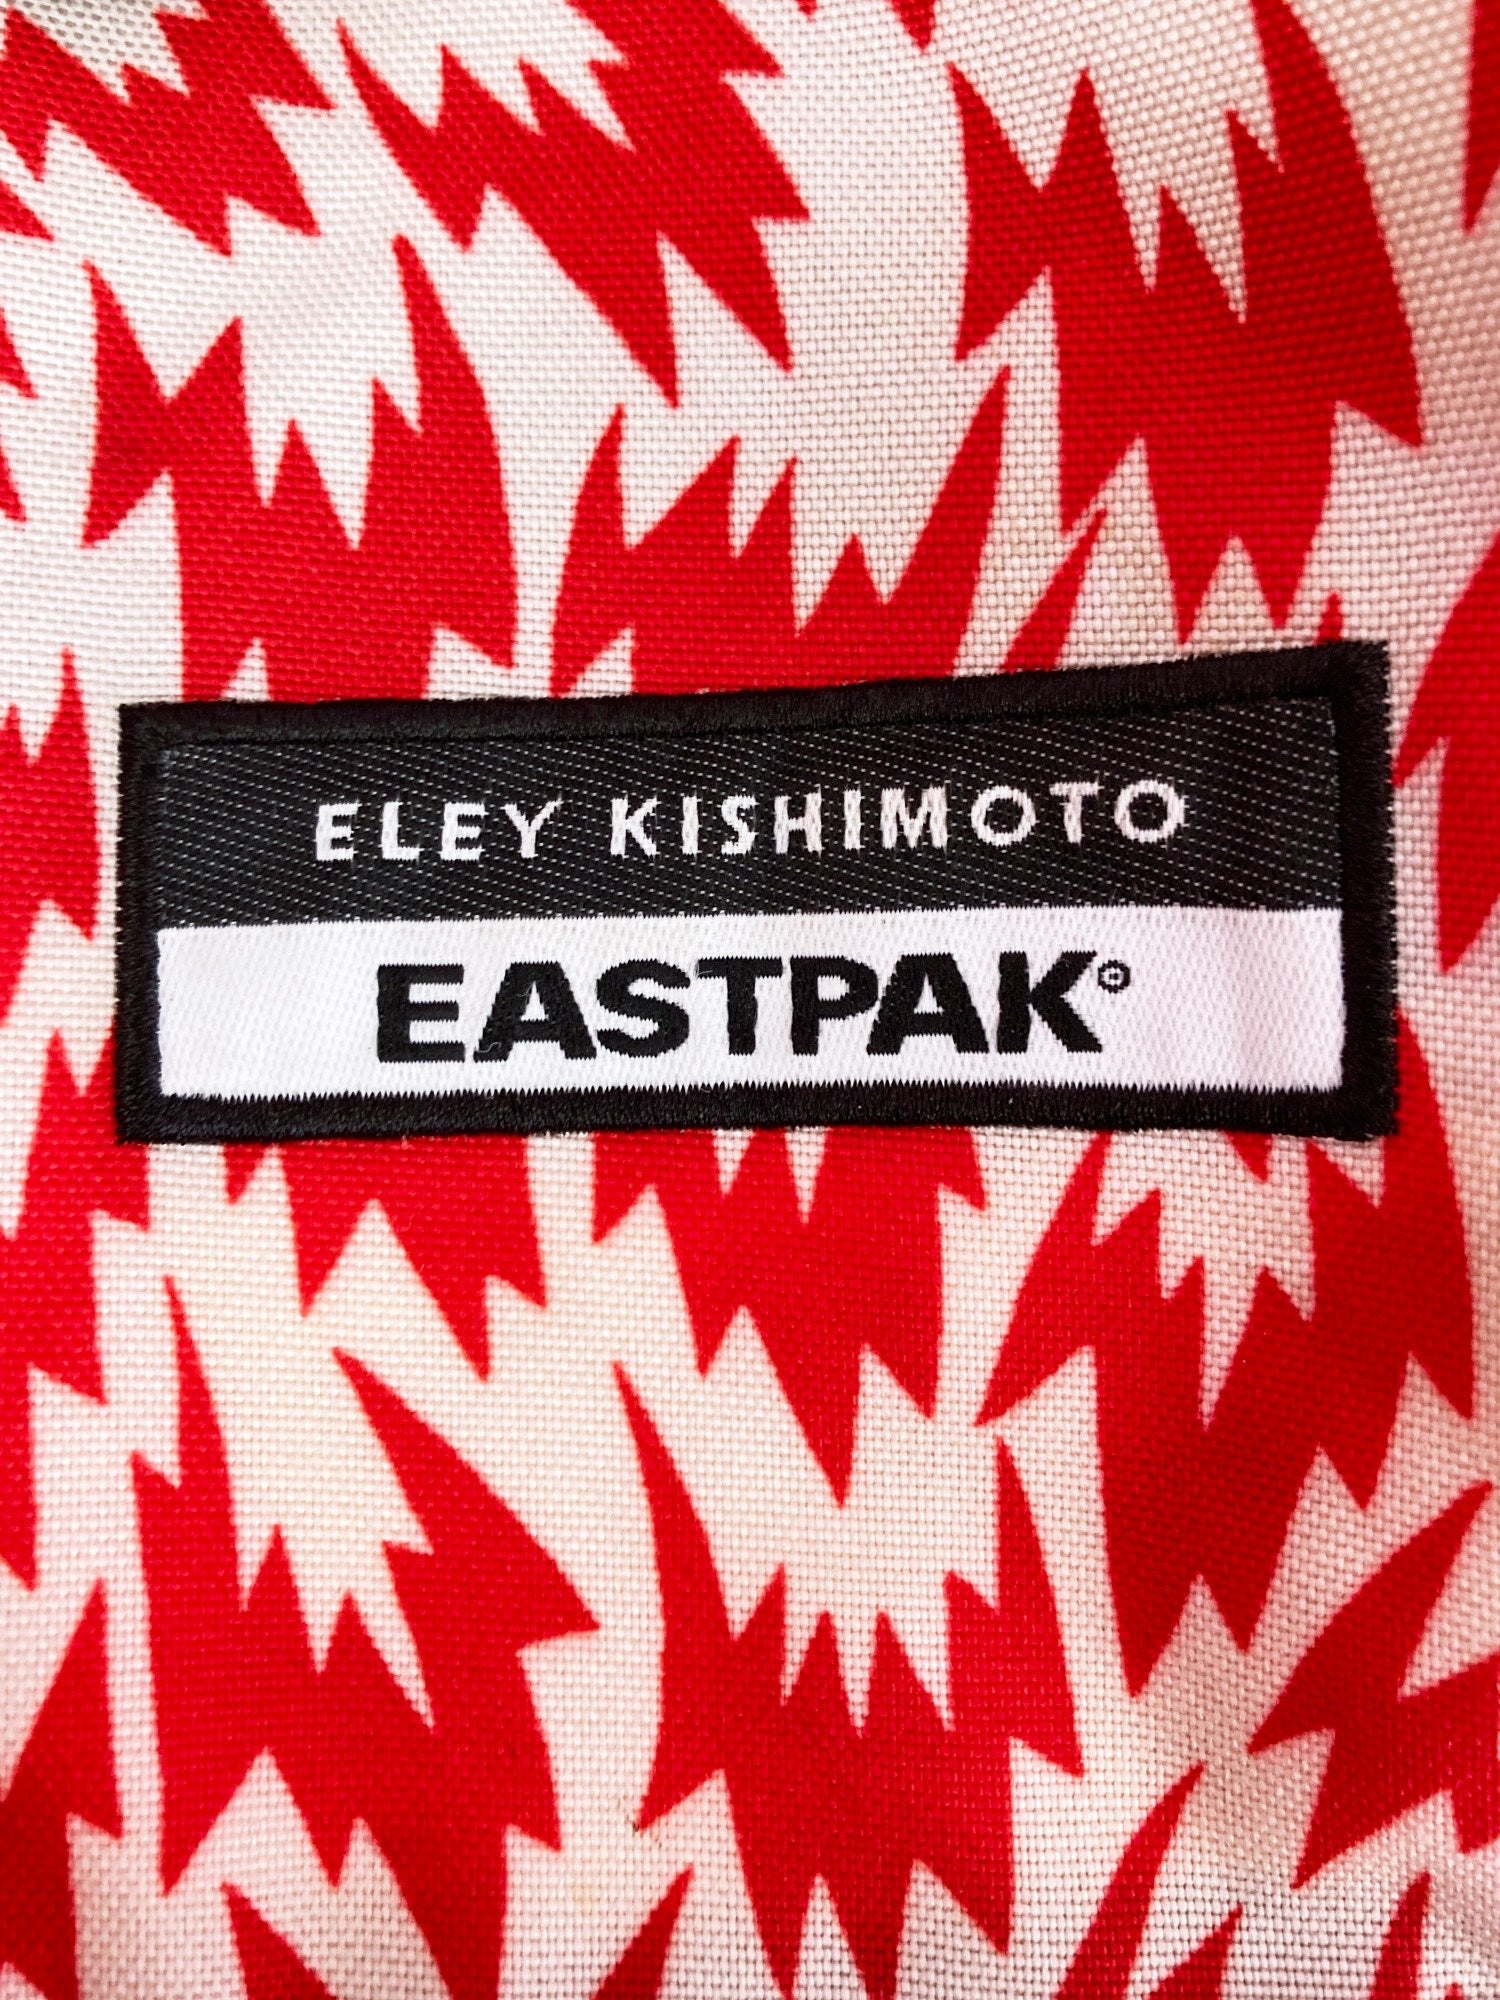 Eastpak x Eley Kishimoto 2009 red corduroa nylon flash print messenger bag